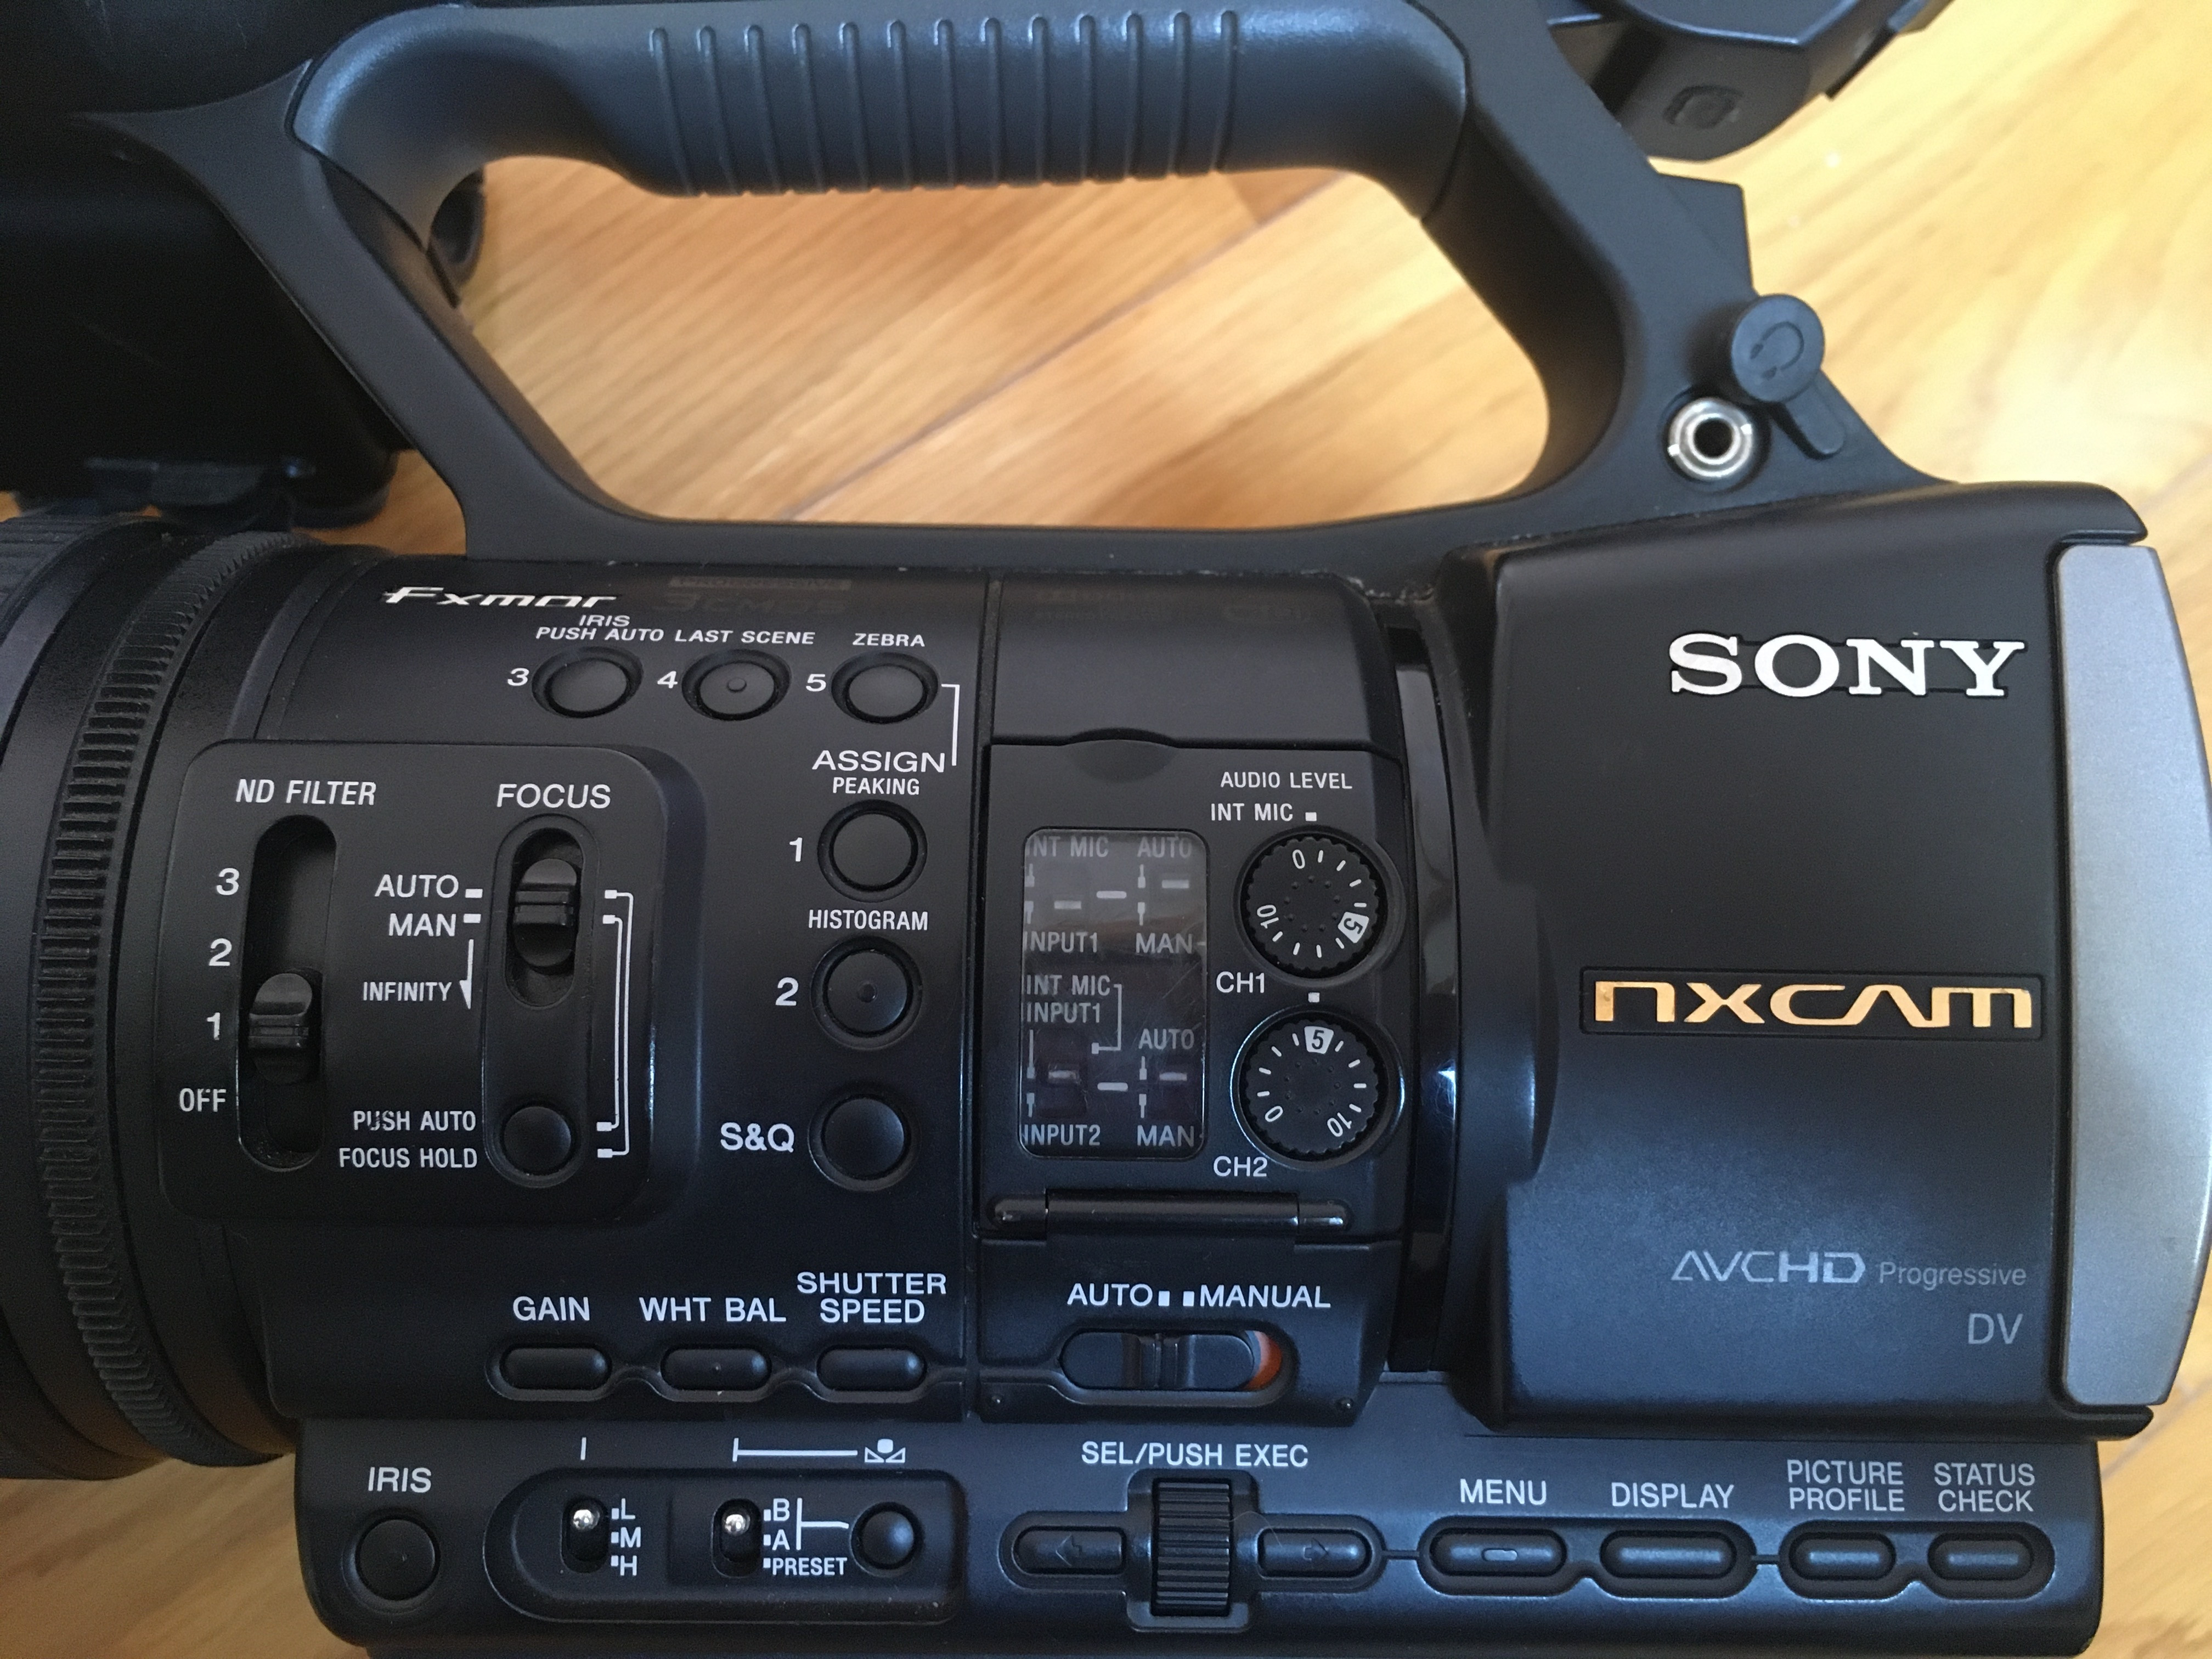 Annonce occasions - Vends caméra Sony NX5 - Le Repaire - Le Repaire